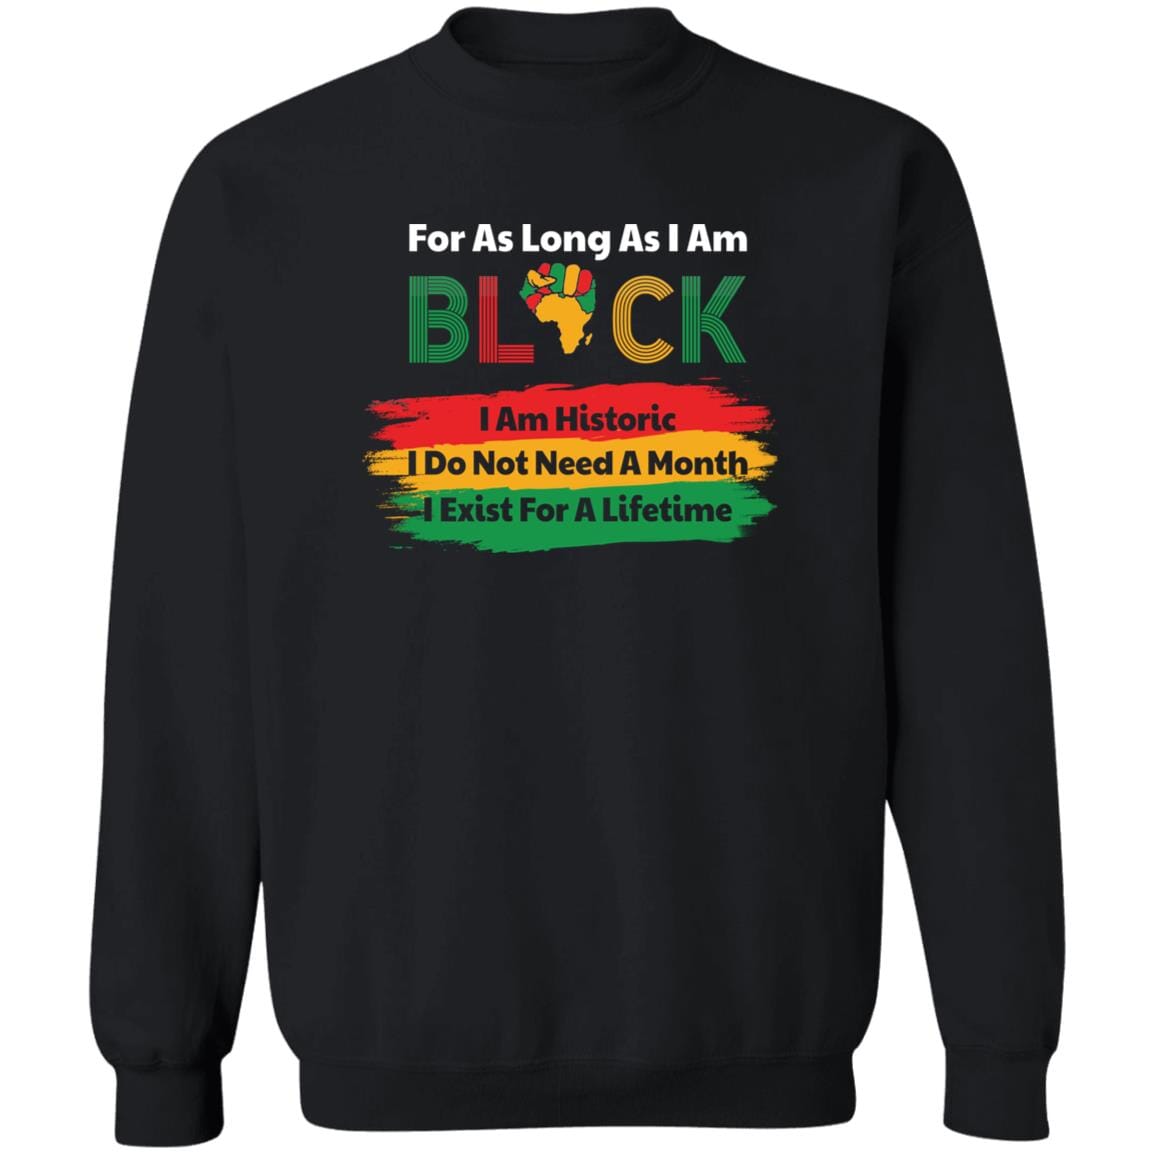 As Long As I Am Black T-shirt Apparel Gearment Crewneck Sweatshirt Black S